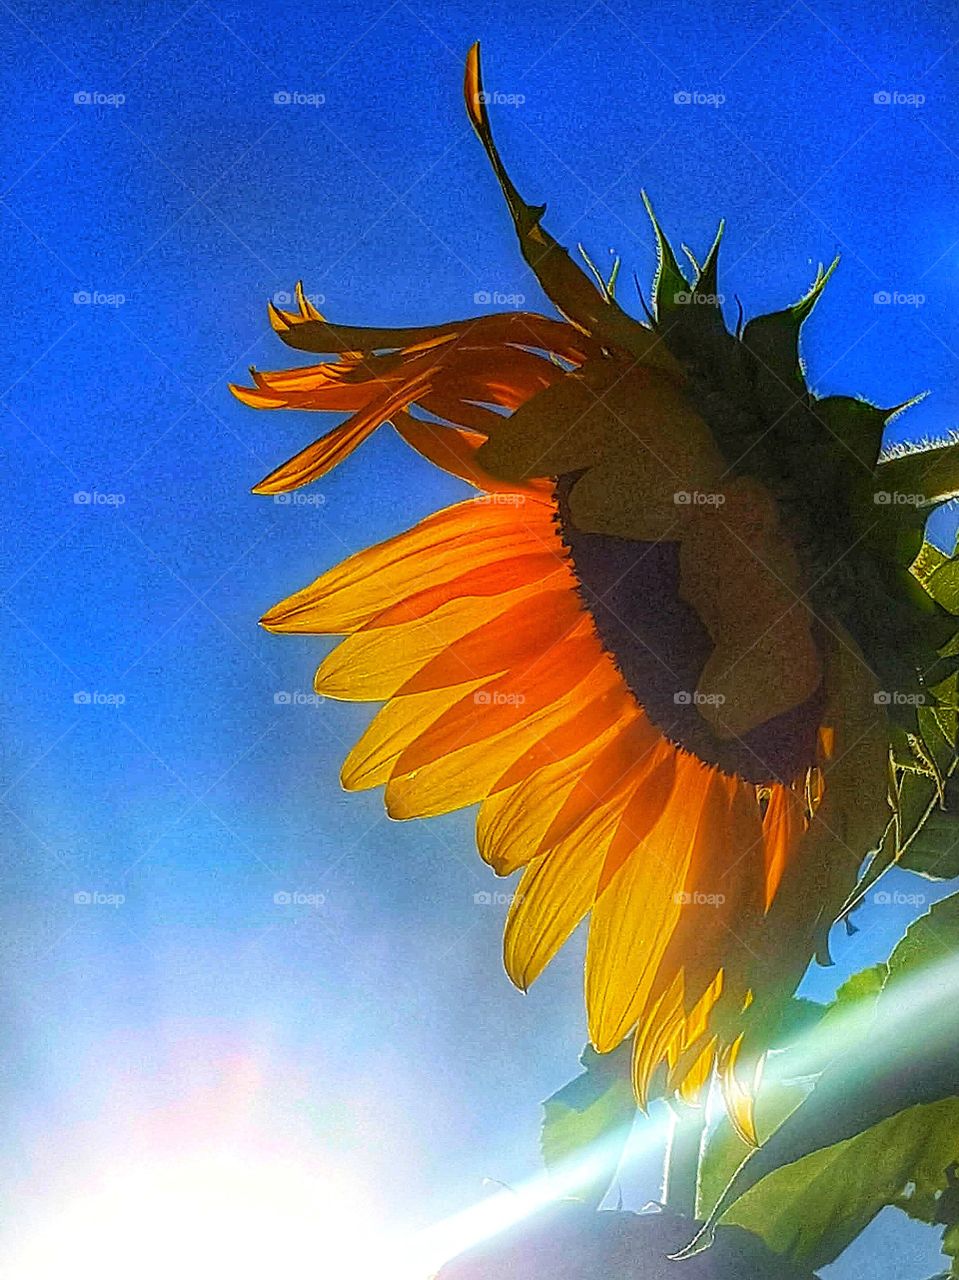 Sun setting illuminates a Sunflower